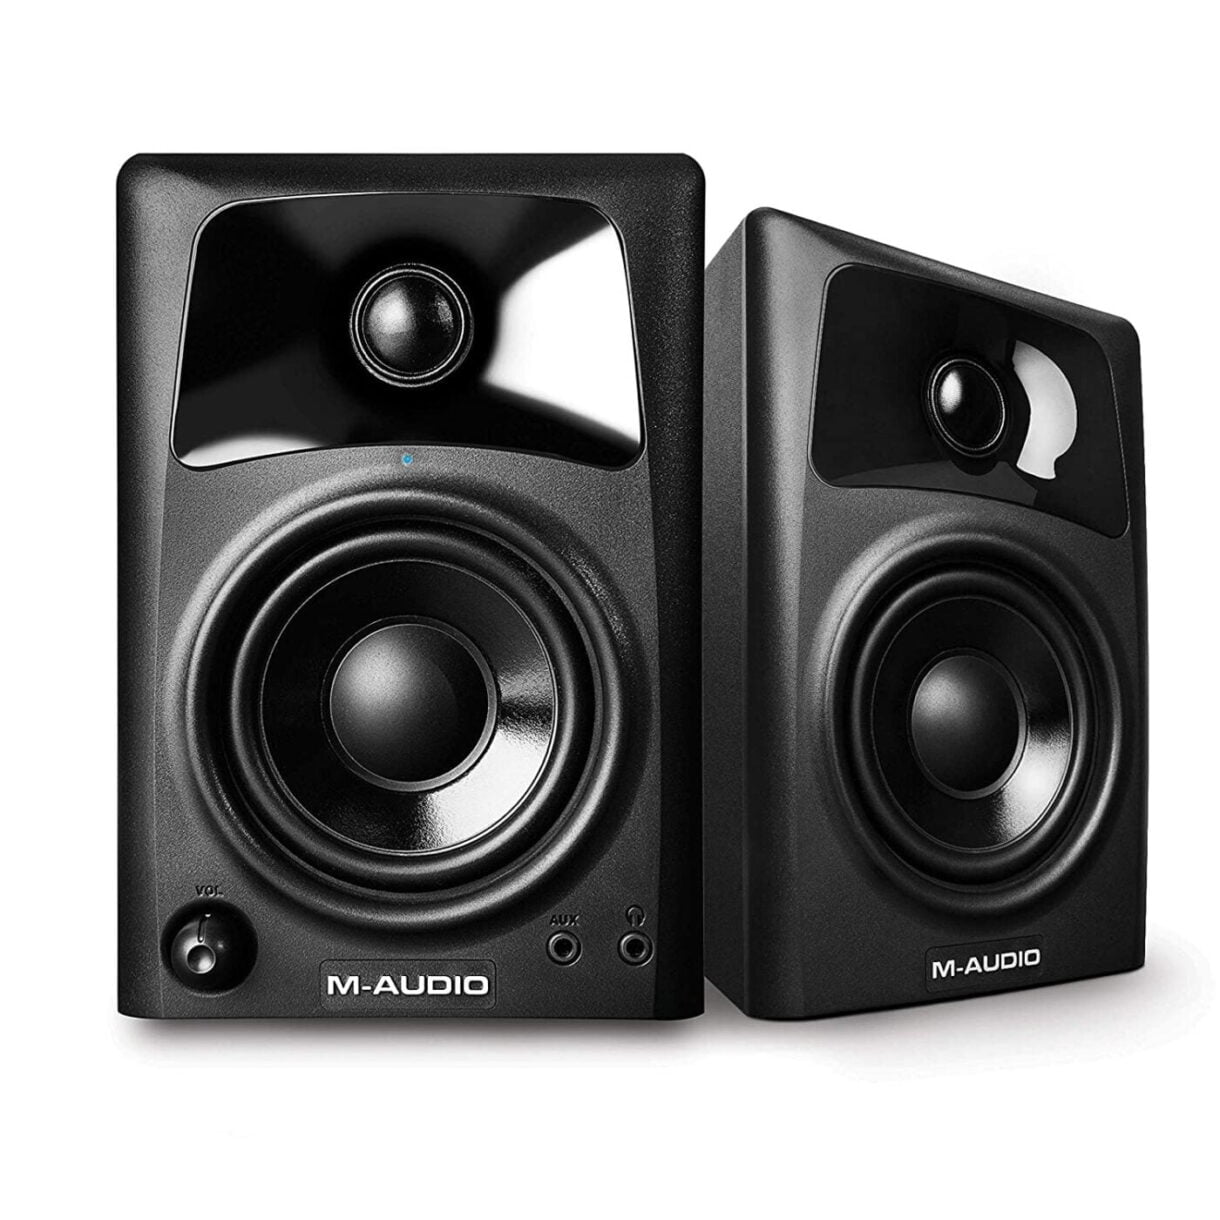 M-Audio 10-Watt Compact Studio Monitor Speakers with 3-inch Woofer